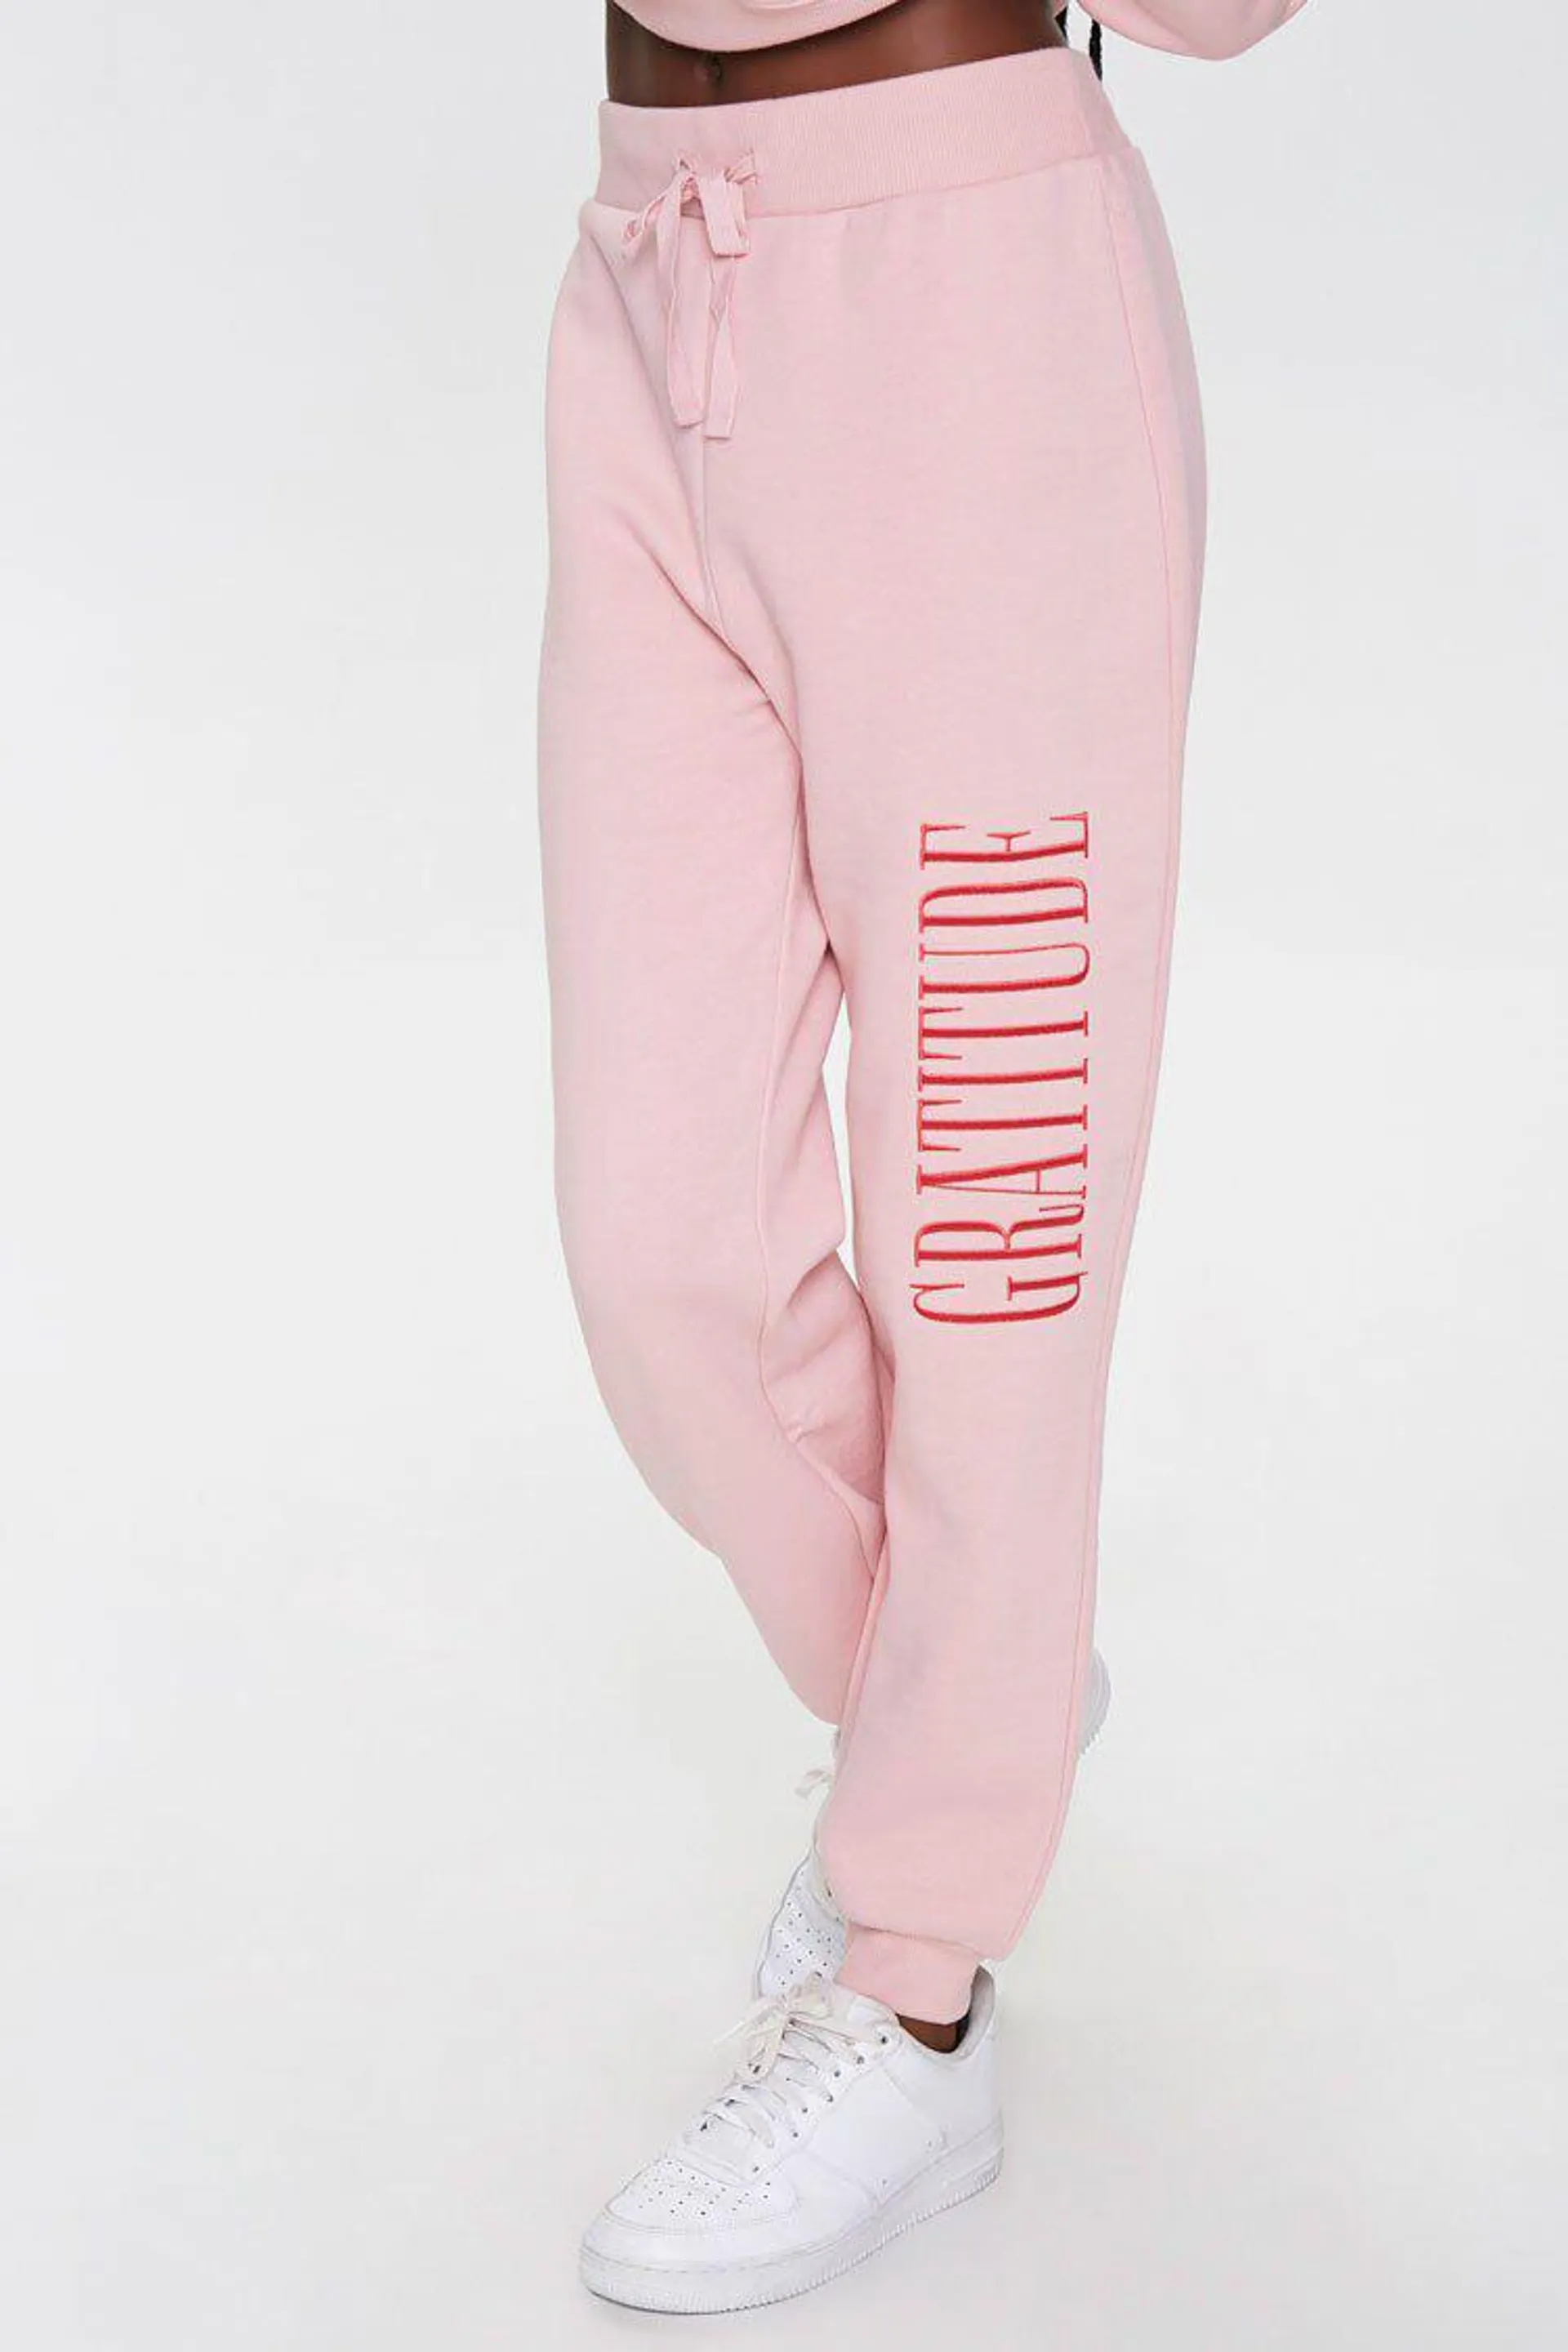 Embroidered Gratitude Sweatpants - Pink/Pink